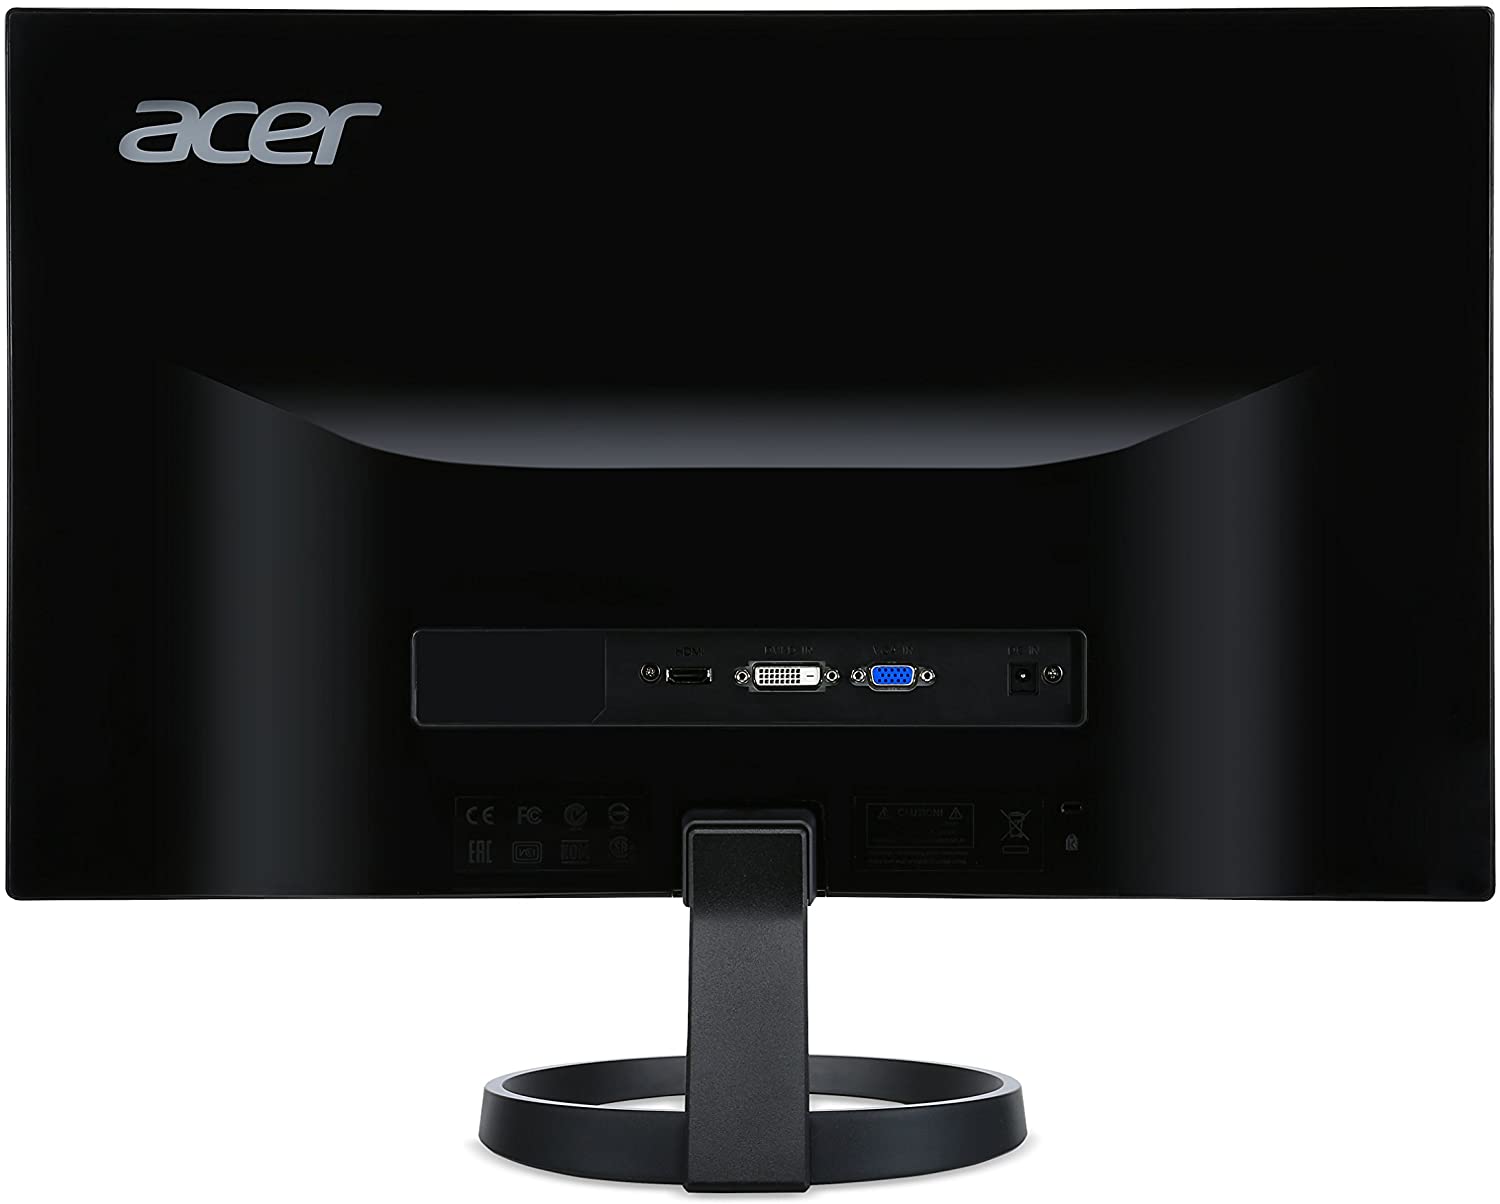 ACER 24" LED IPS R240HY RBIDX VGA+DVI+HDMI MONITOR-Monitor-Makotek Computers